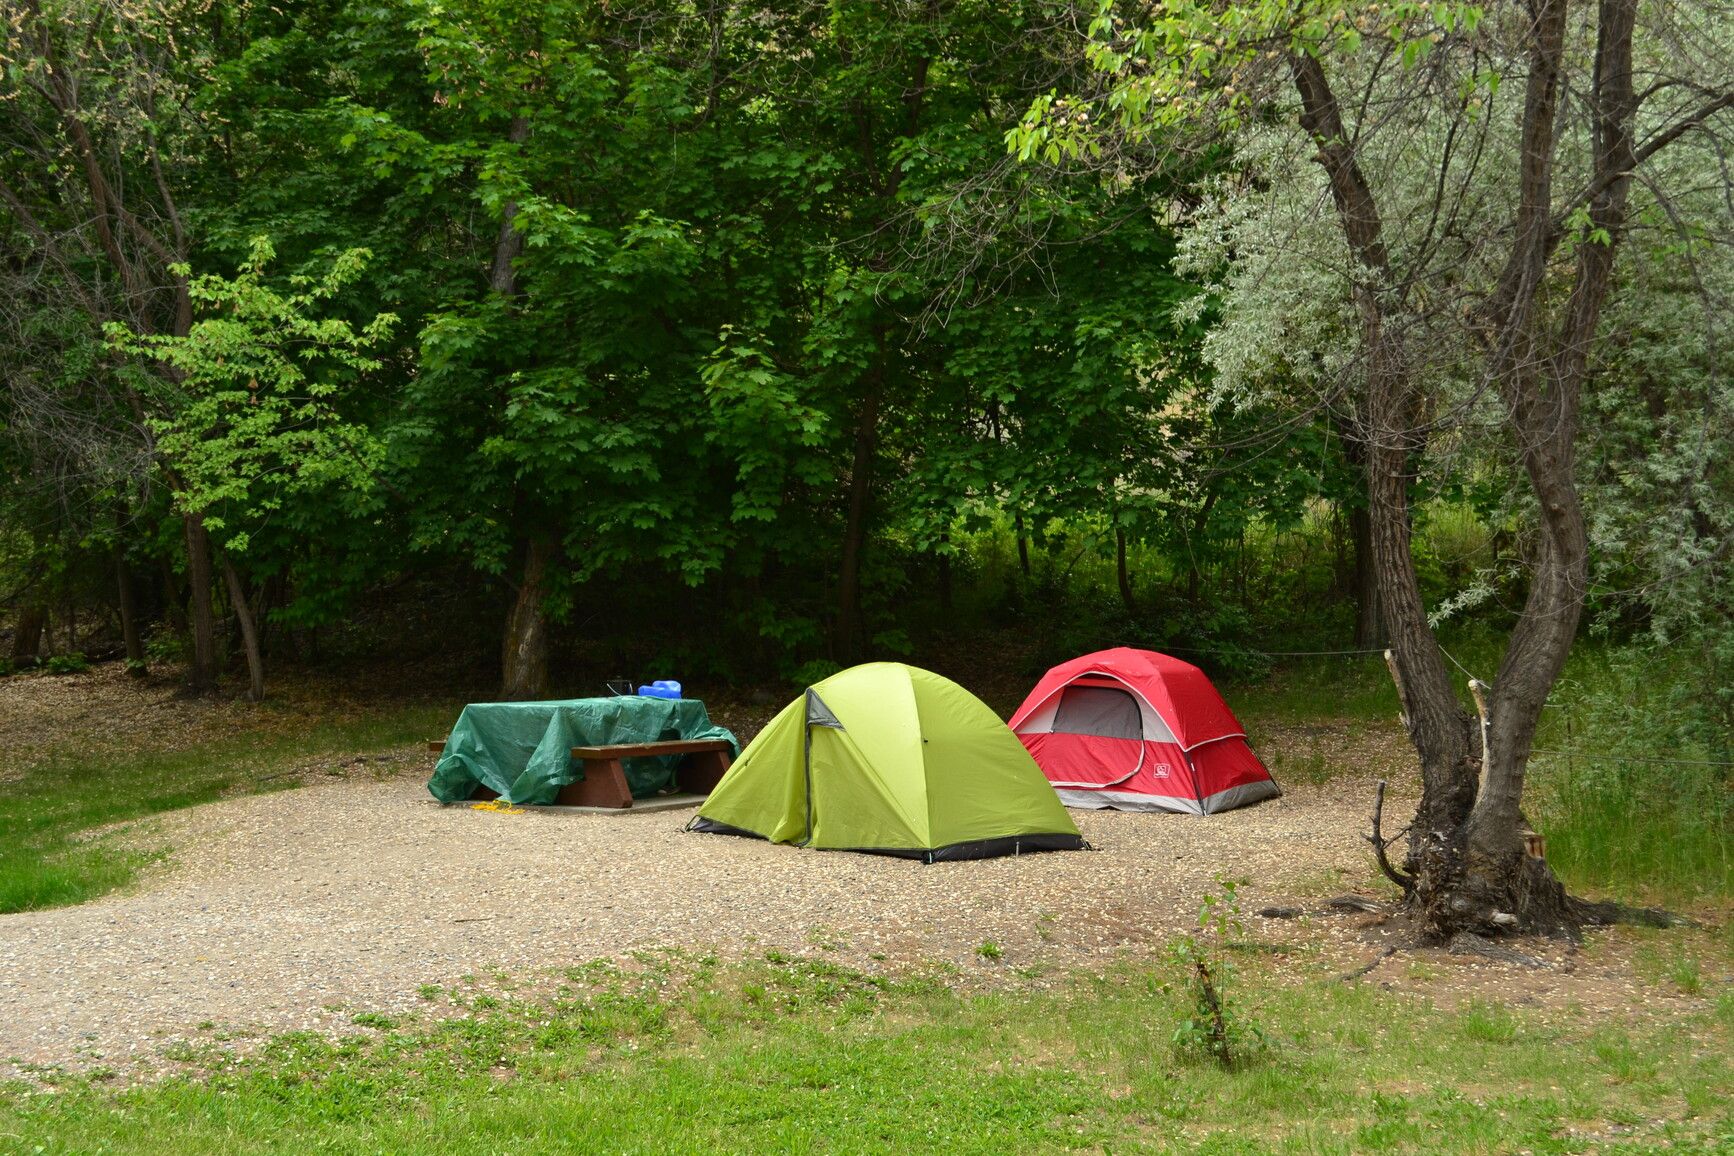 sx̌ʷəx̌ʷnitkʷ Park Provincial Park campsite.